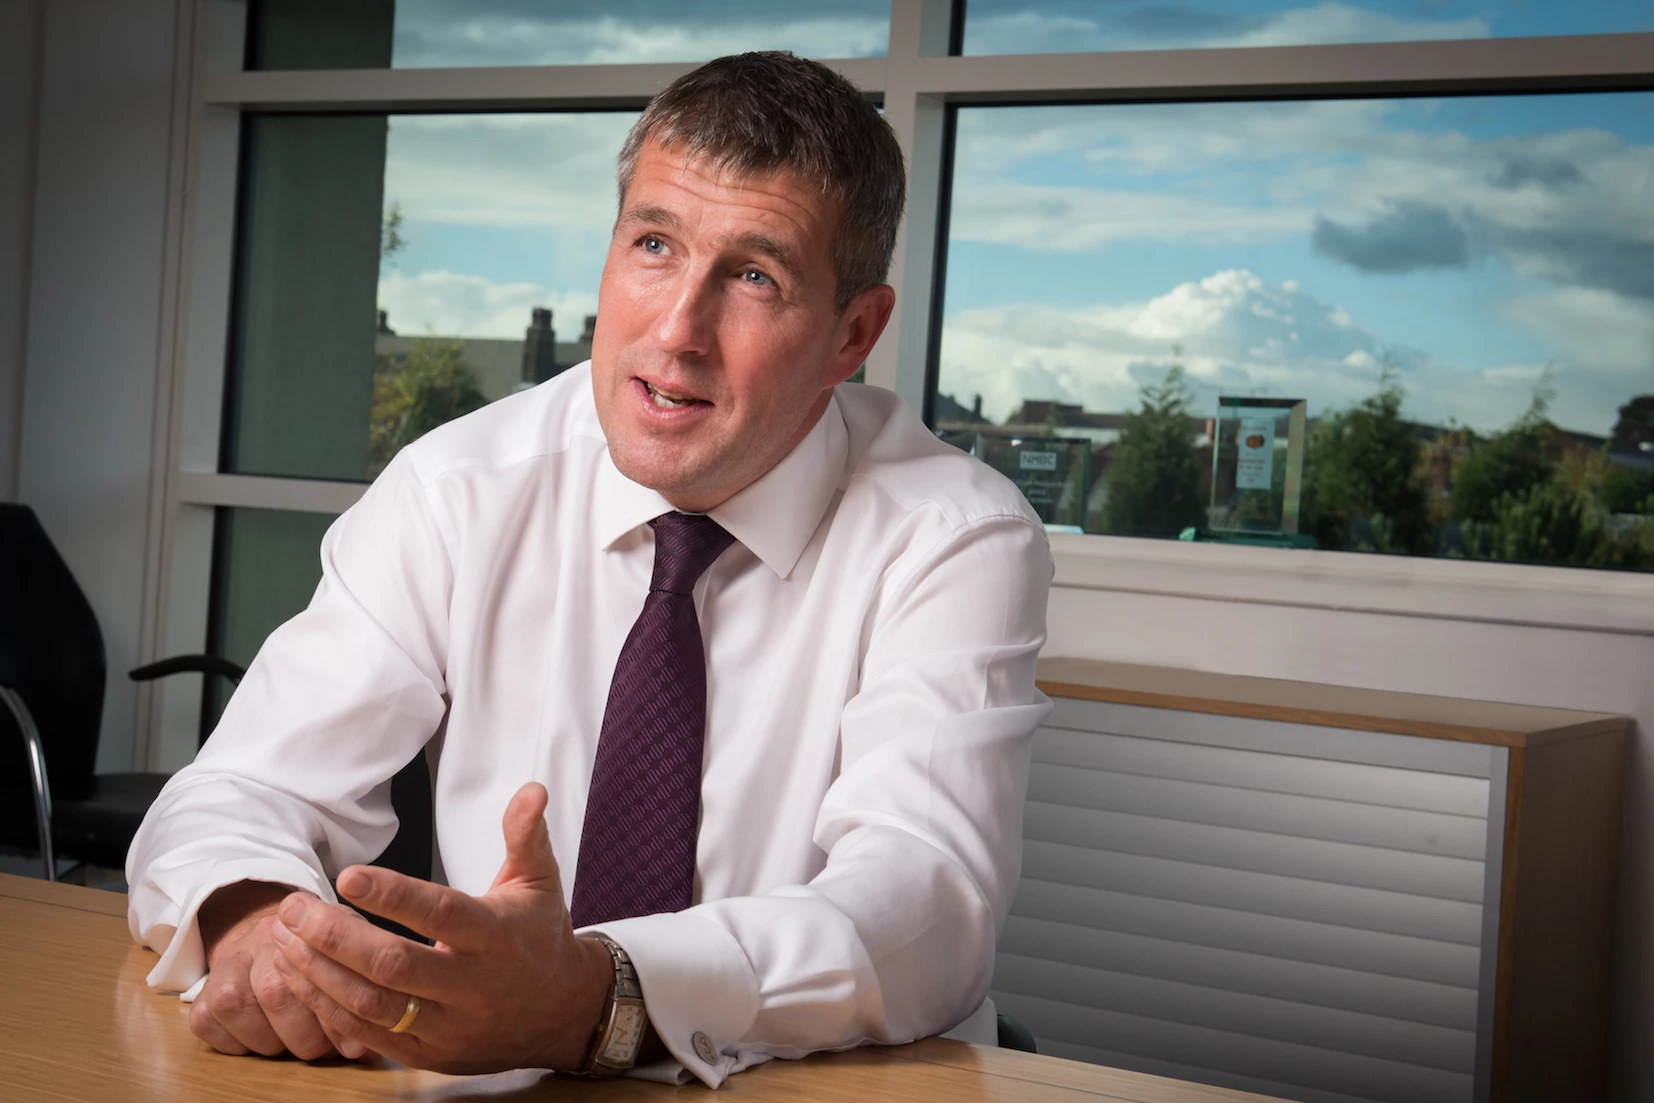 Managing Director of Barratt Developments Yorkshire West, Ian Ruthven